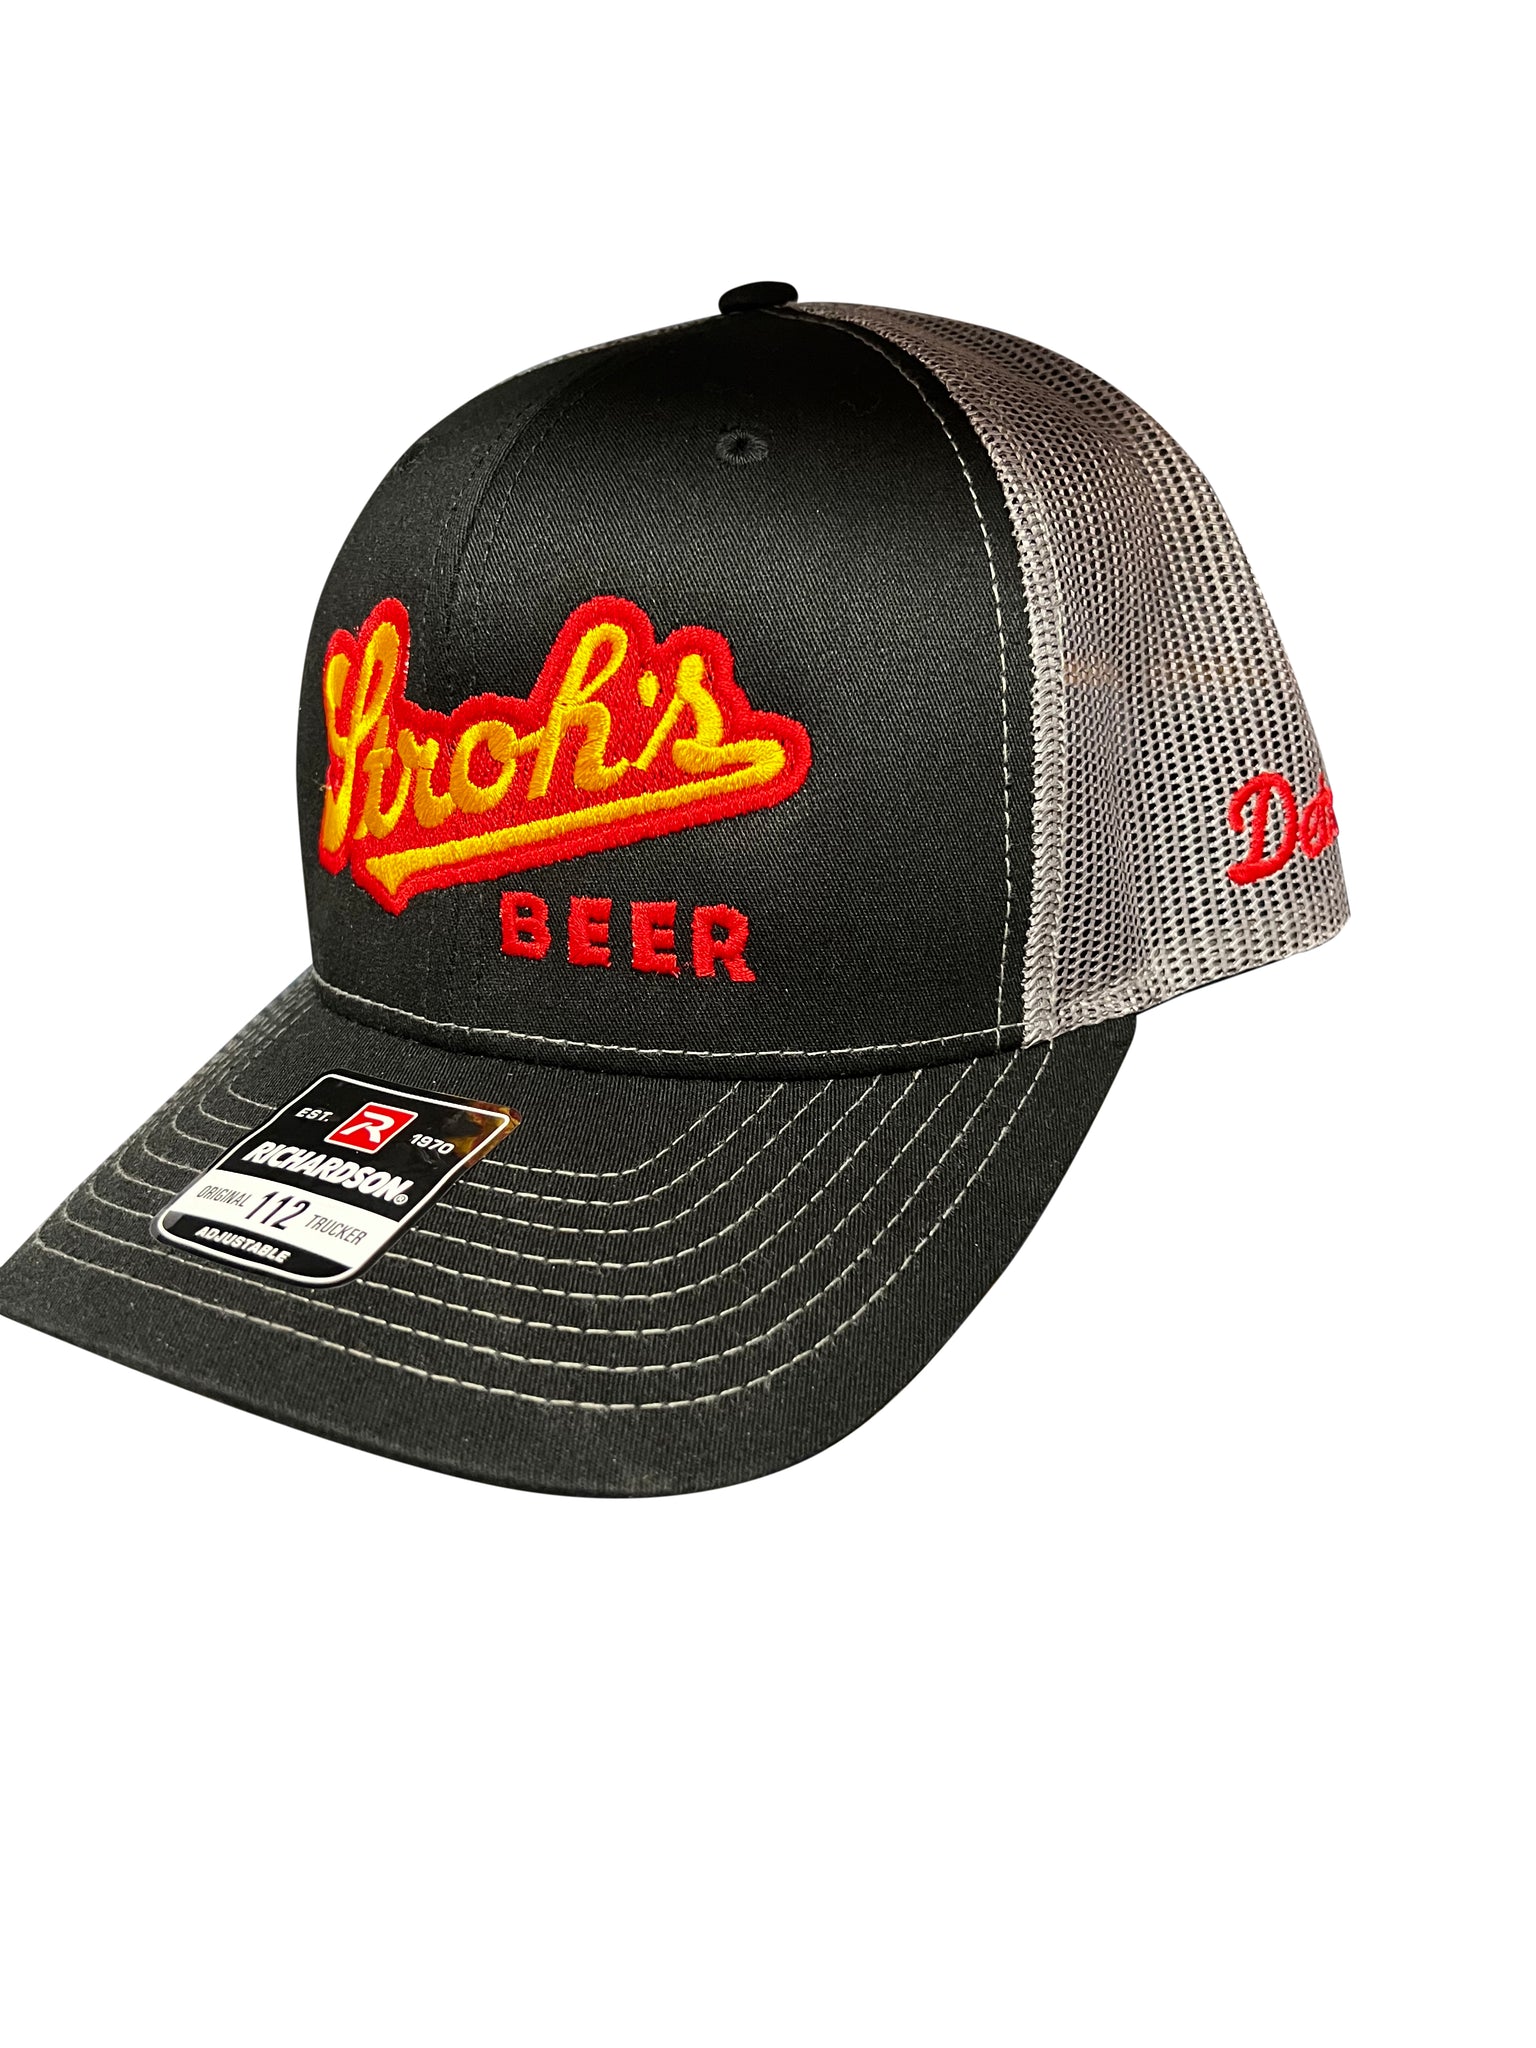 Stroh's Trucker Hat